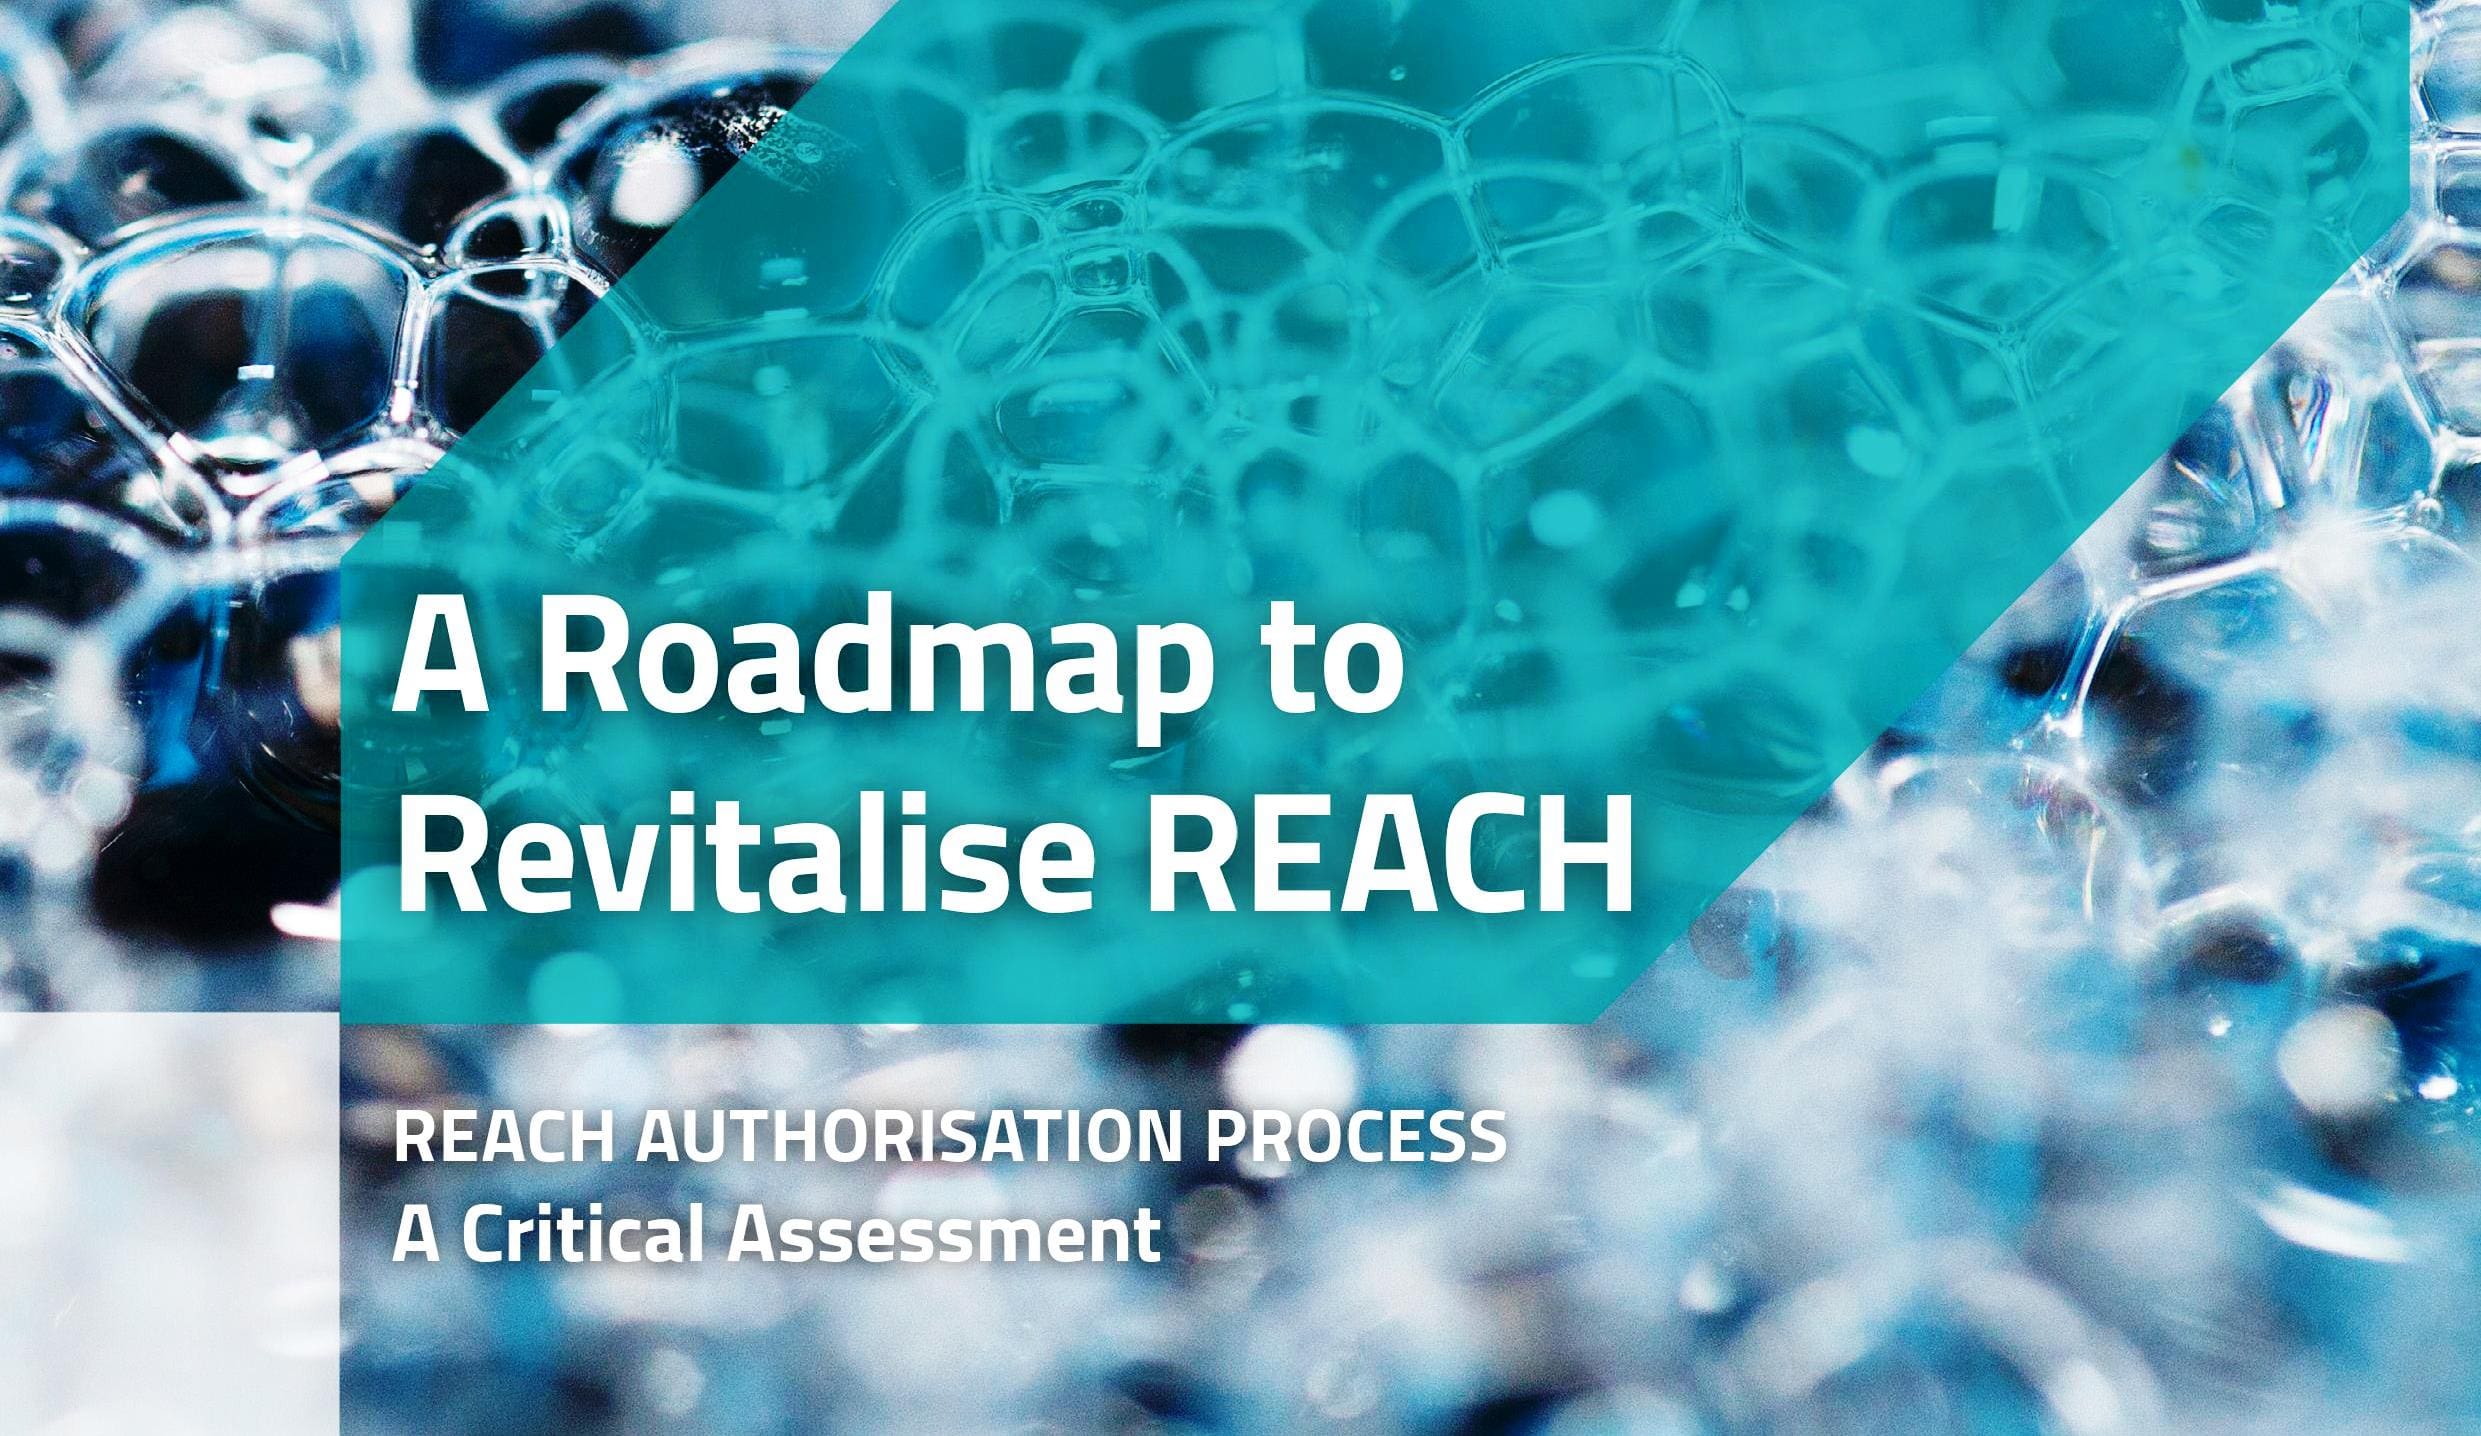 Estudio "A roadmap to revitalise REACH".